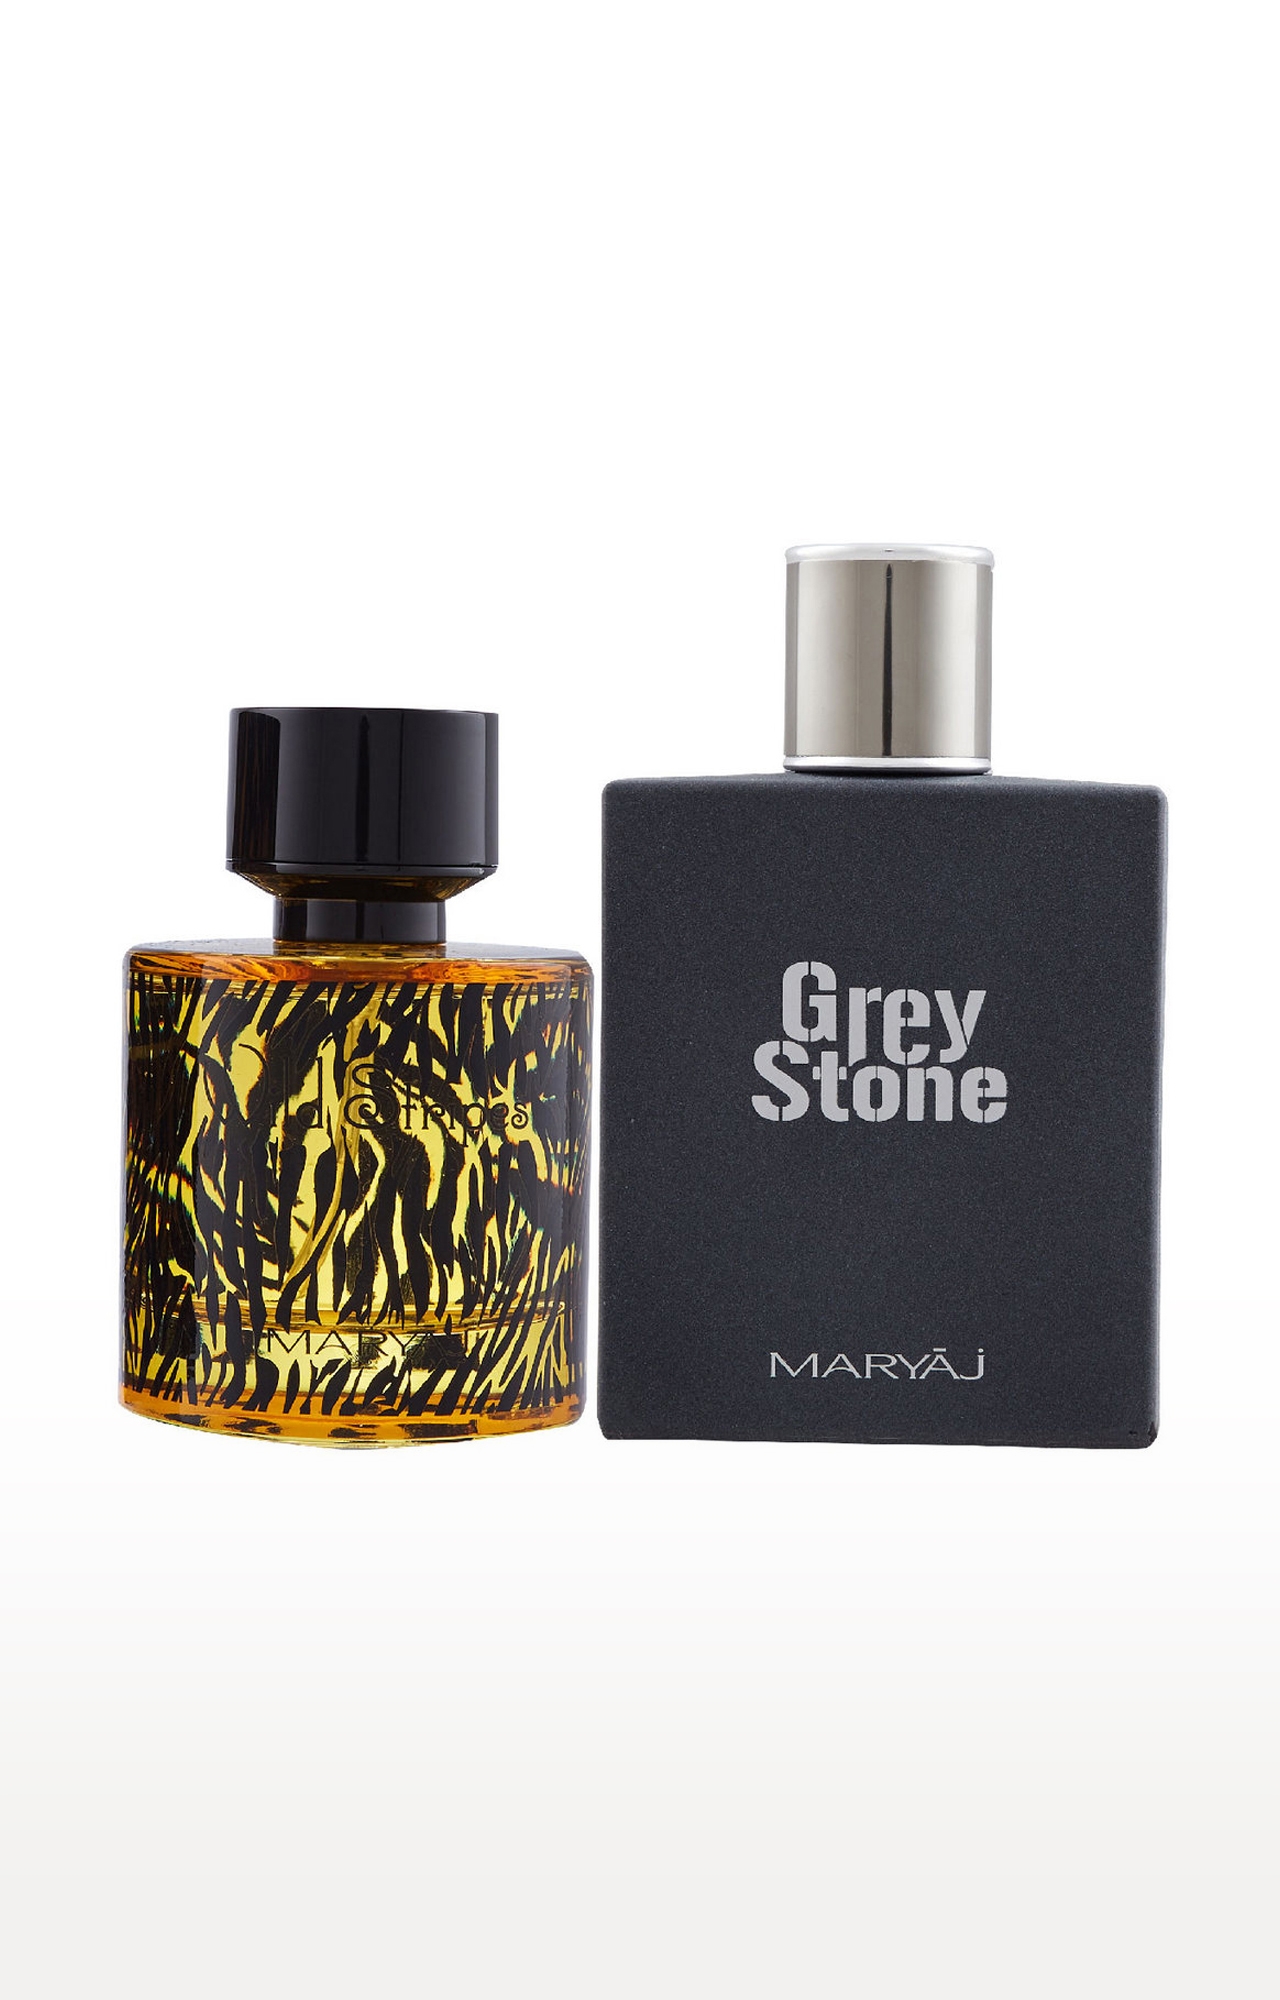 Maryaj Wild Stripes Eau De Parfum Oriental Perfume 100ml for Men and Maryaj Grey Stone Eau De Parfum Perfume 100ml for Men